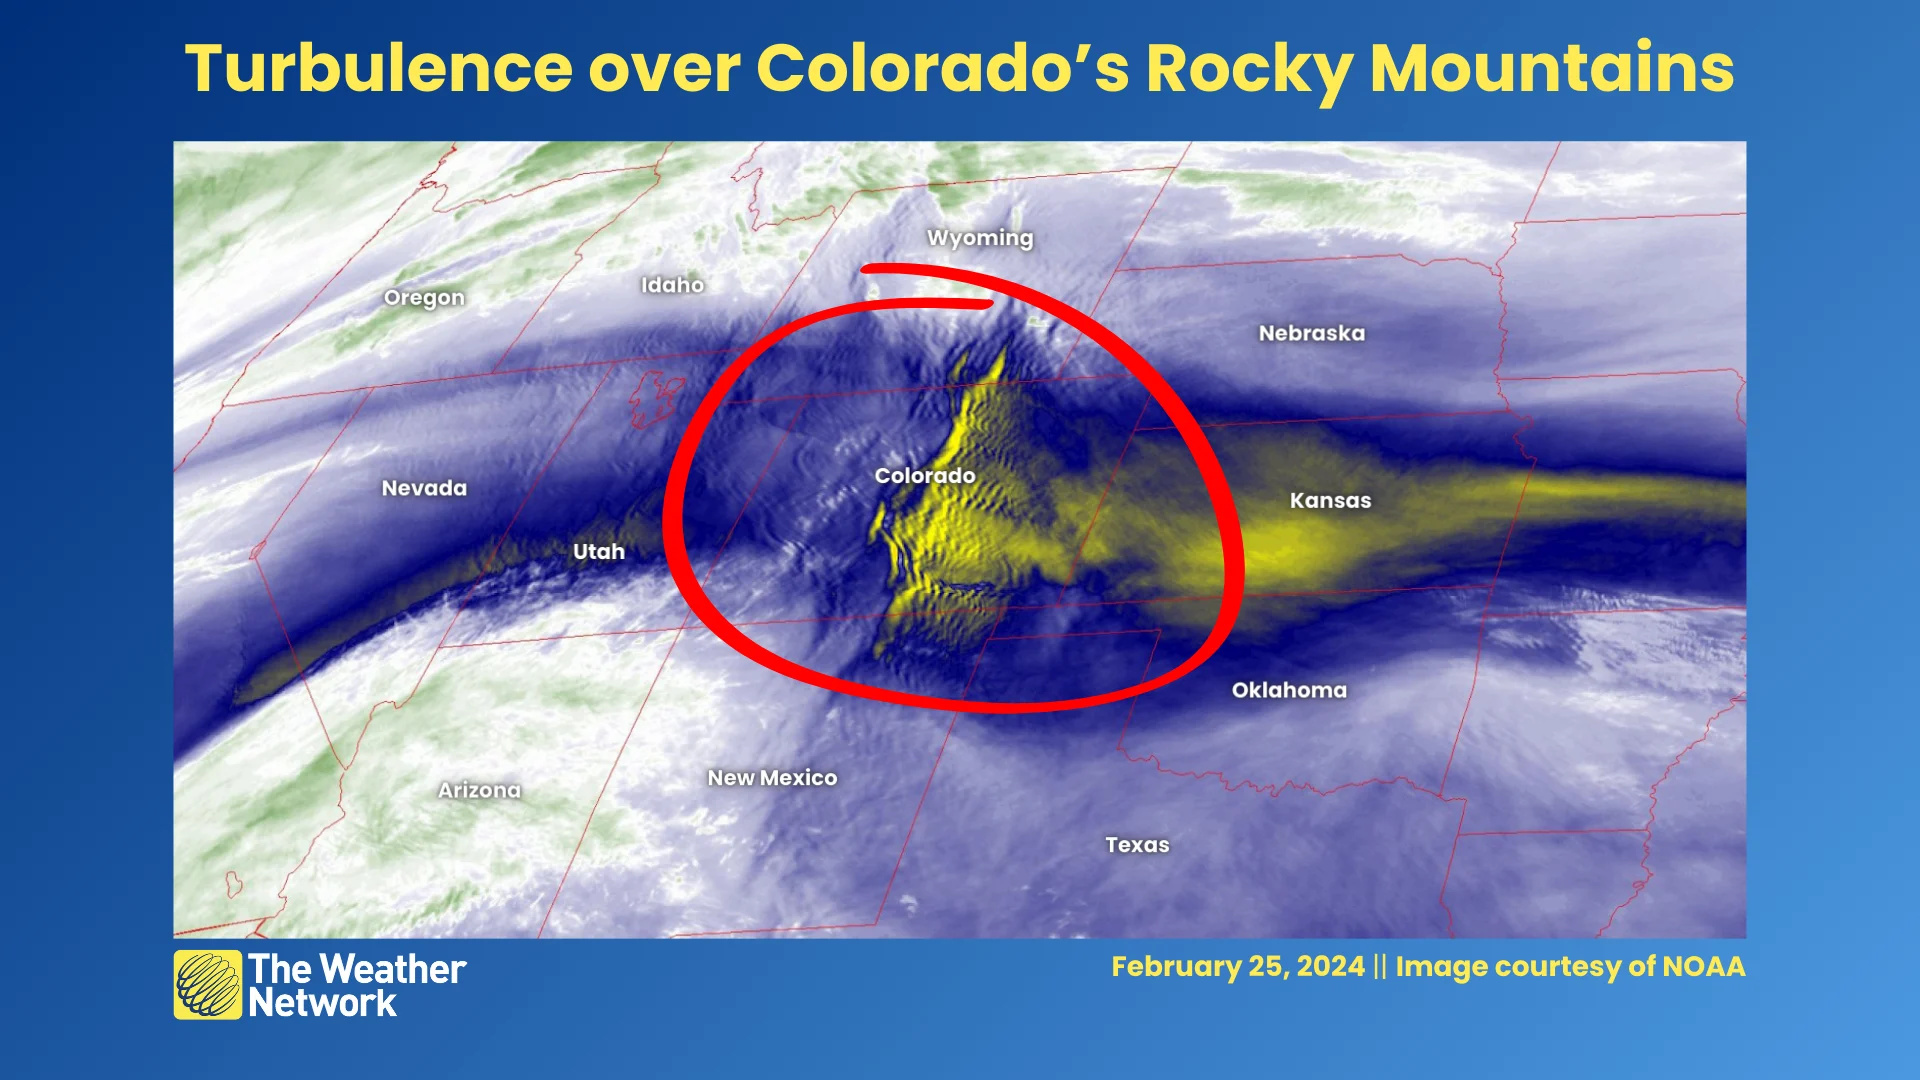 Colorado Rocky mountain turbulence February 25 2024